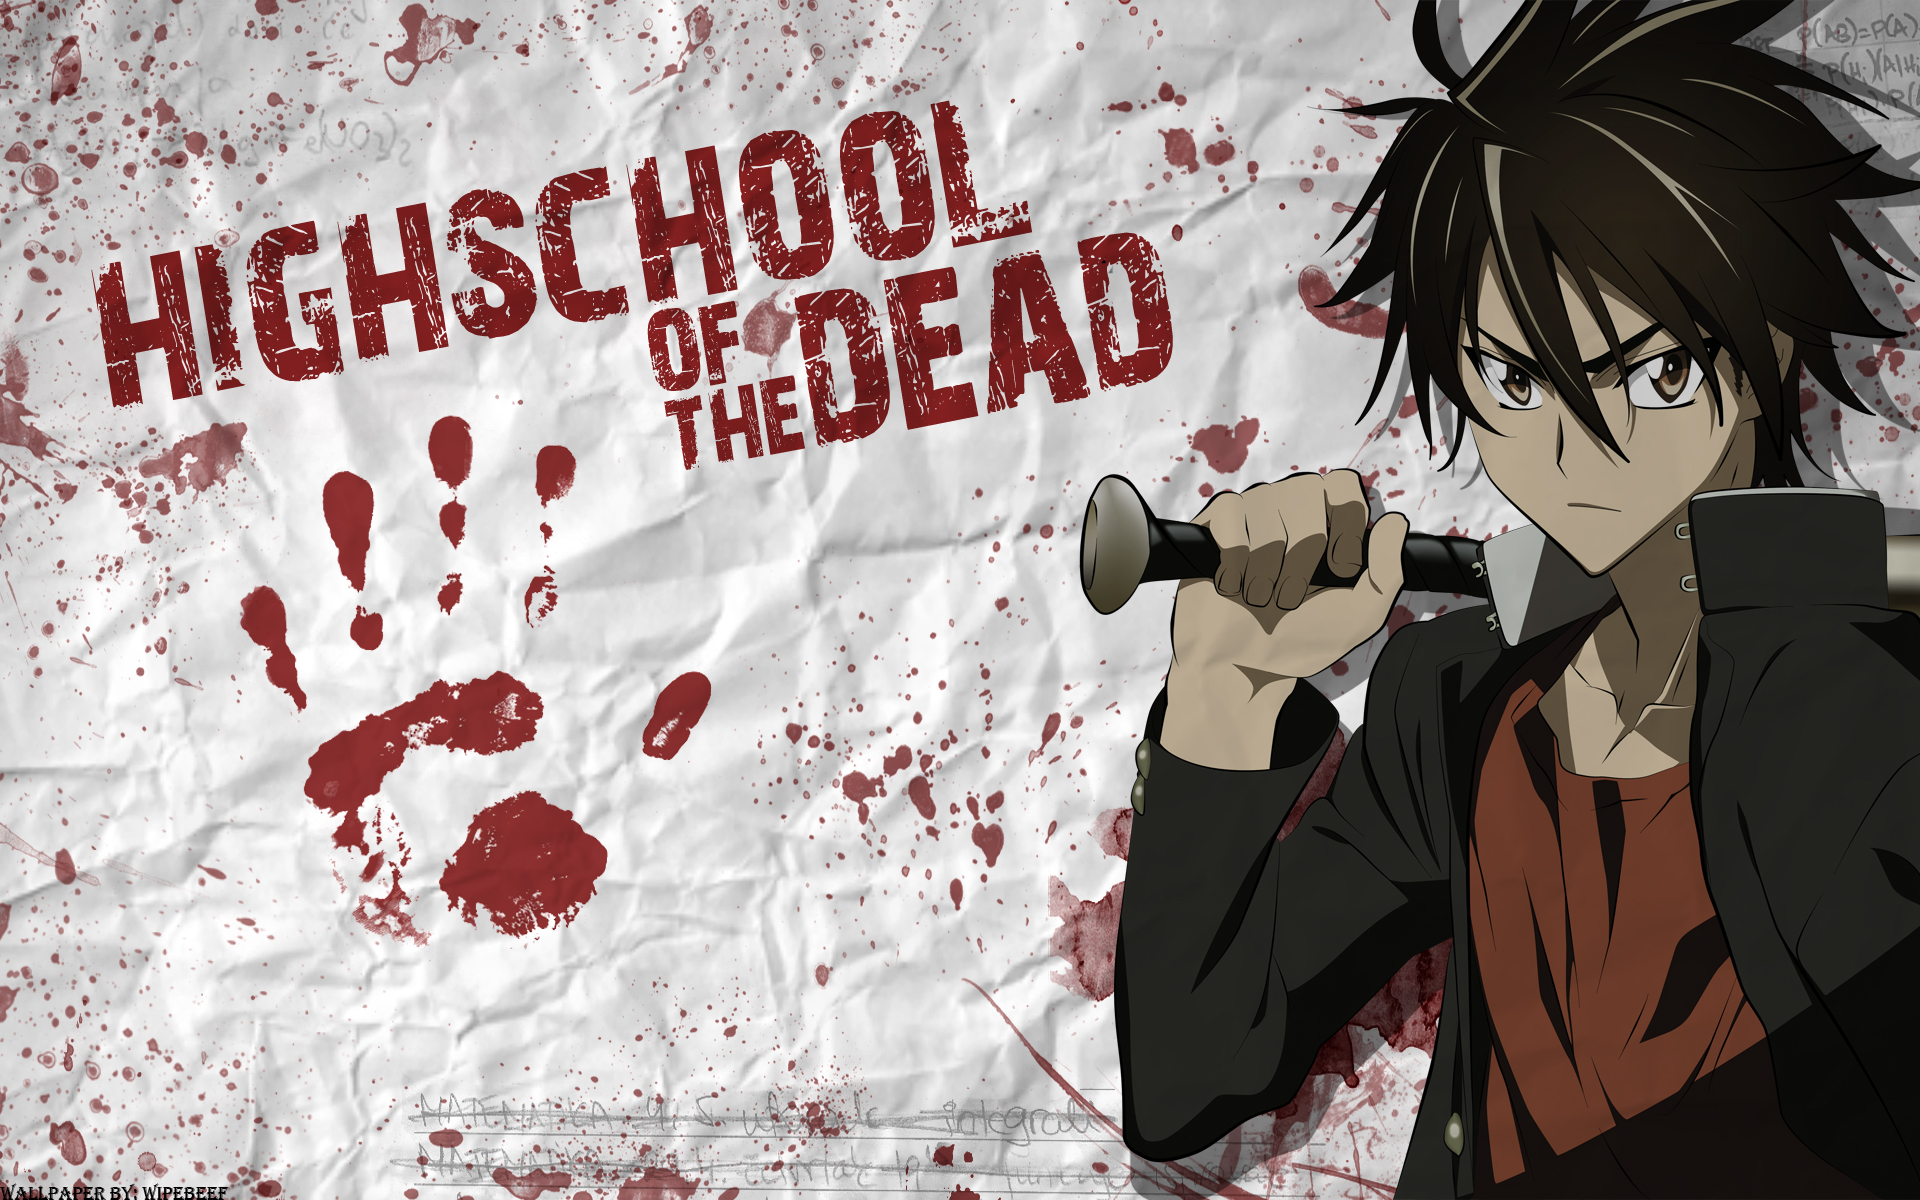 Highschool of the Dead: Drifters of the Dead 